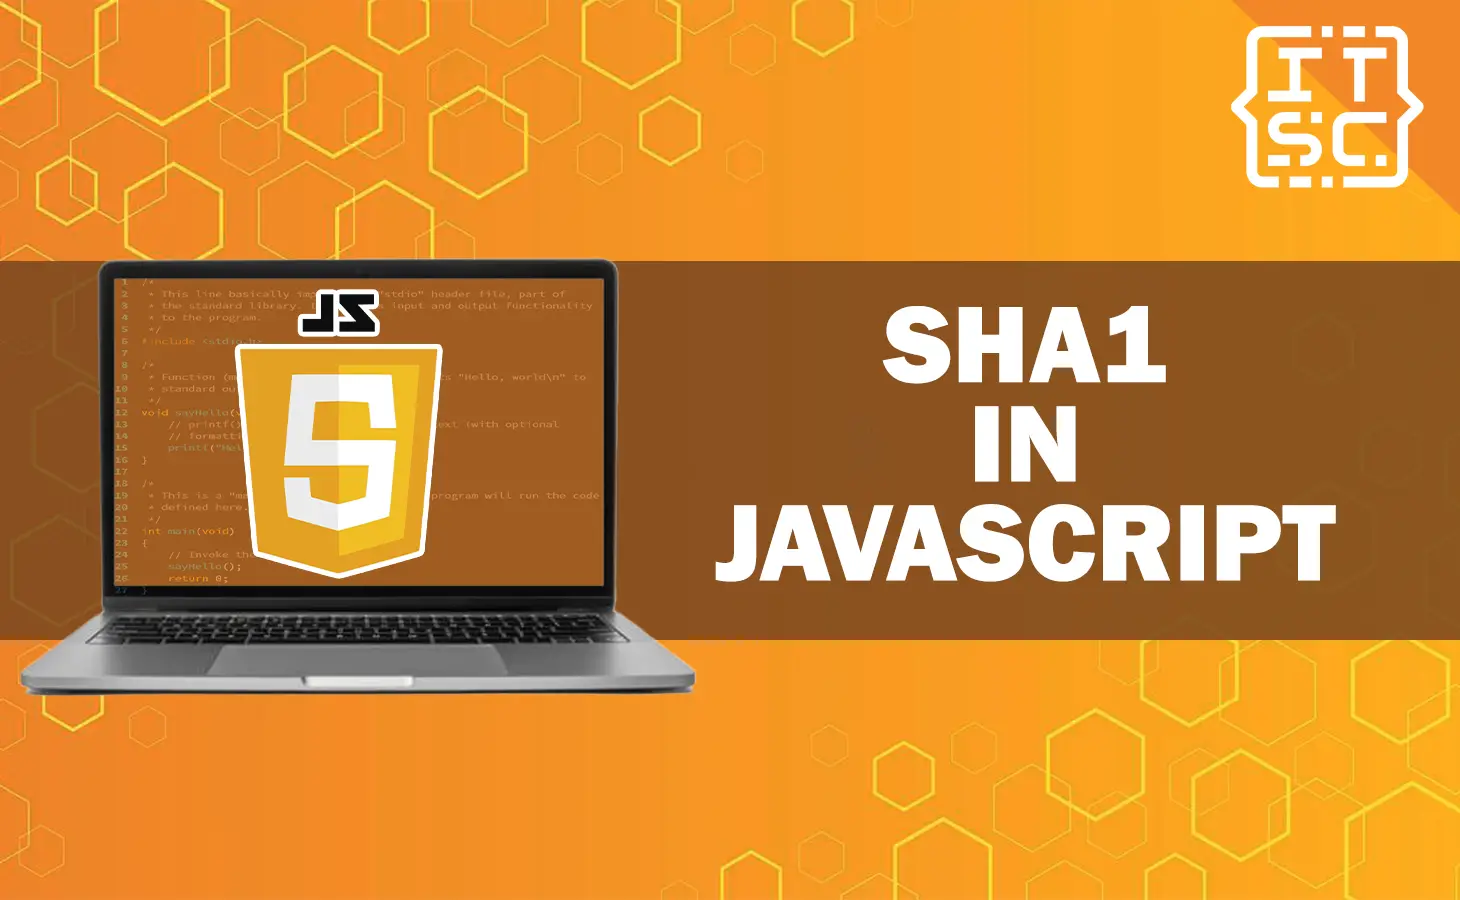 Sha1 in JavaScript